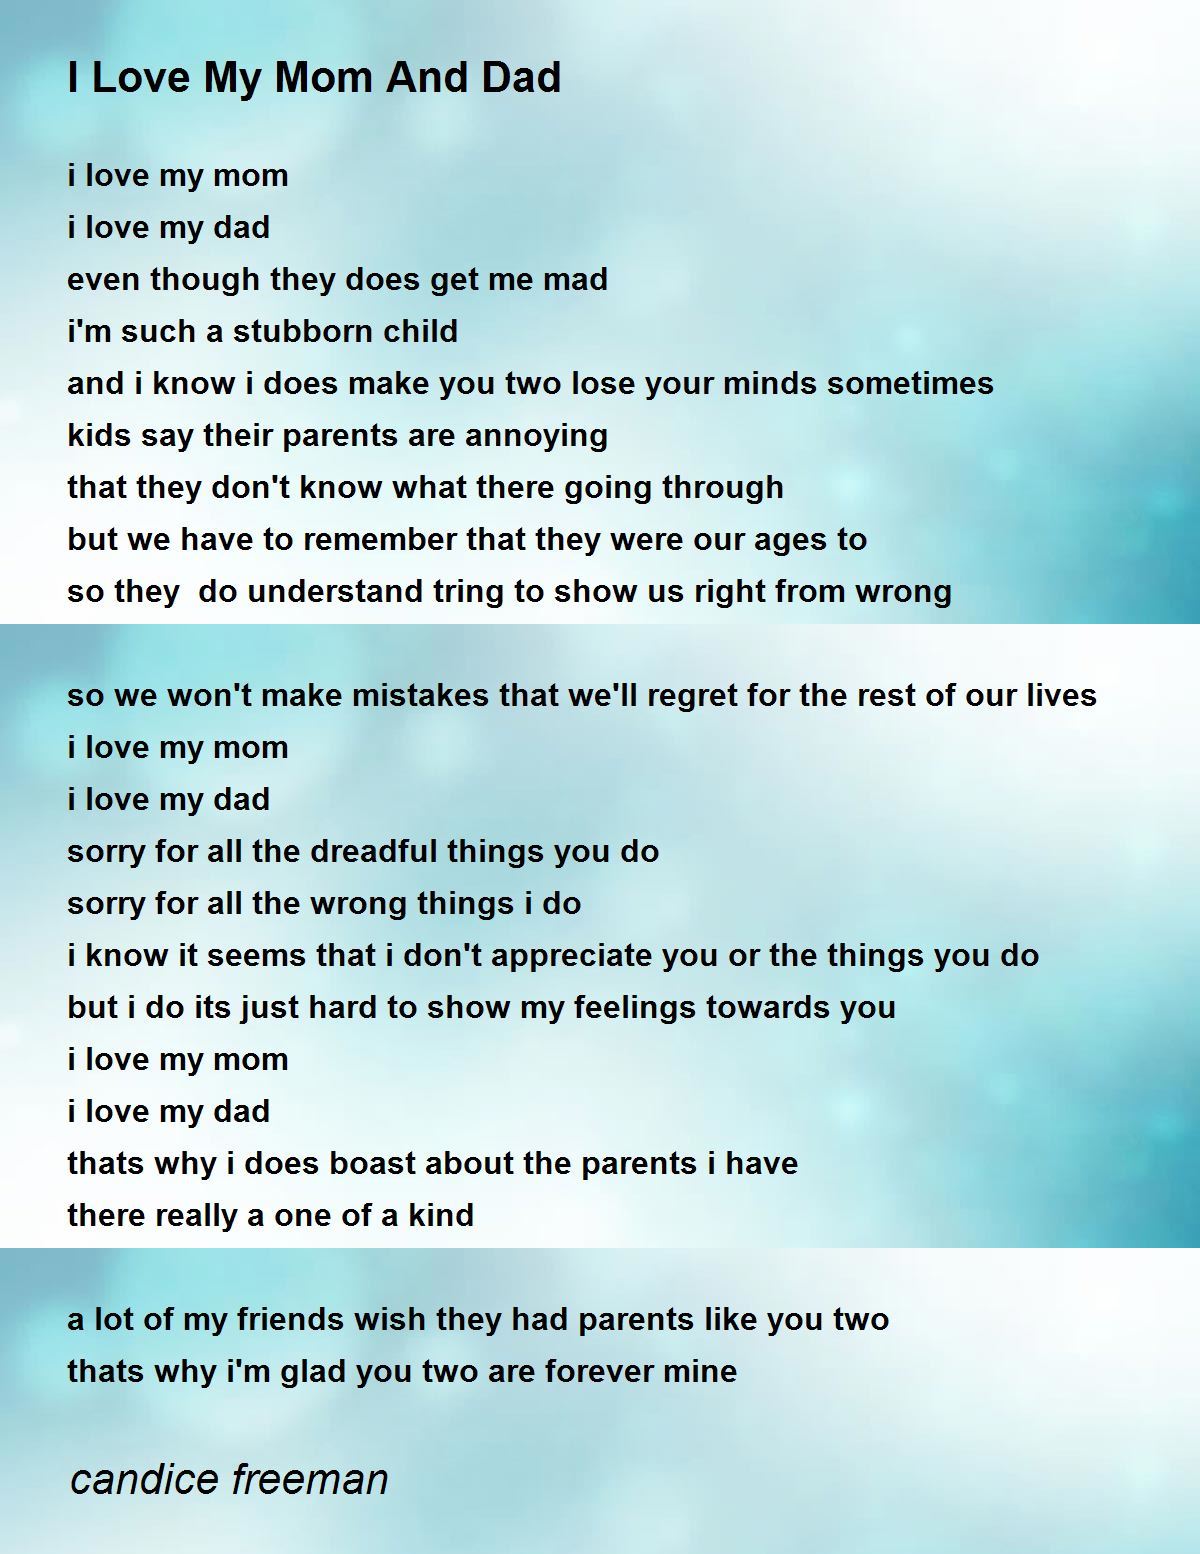 I Love My Mom And Dad - I Love My Mom And Dad Poem by candice freeman